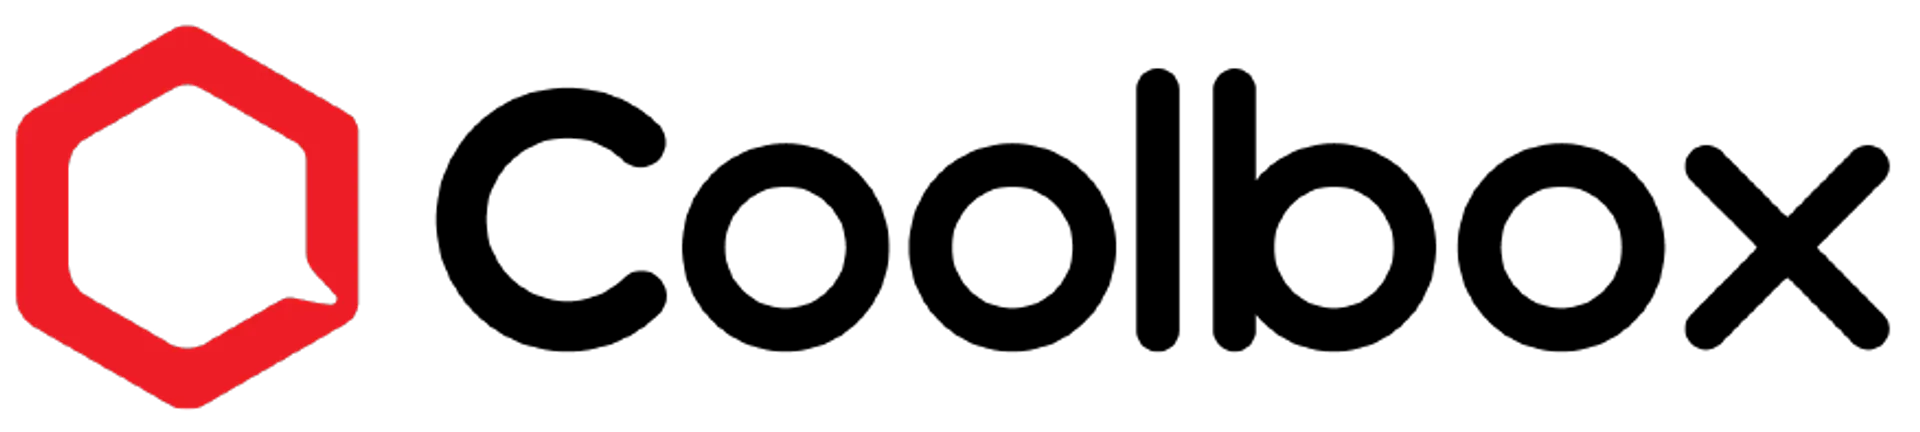 COOLBOX logo